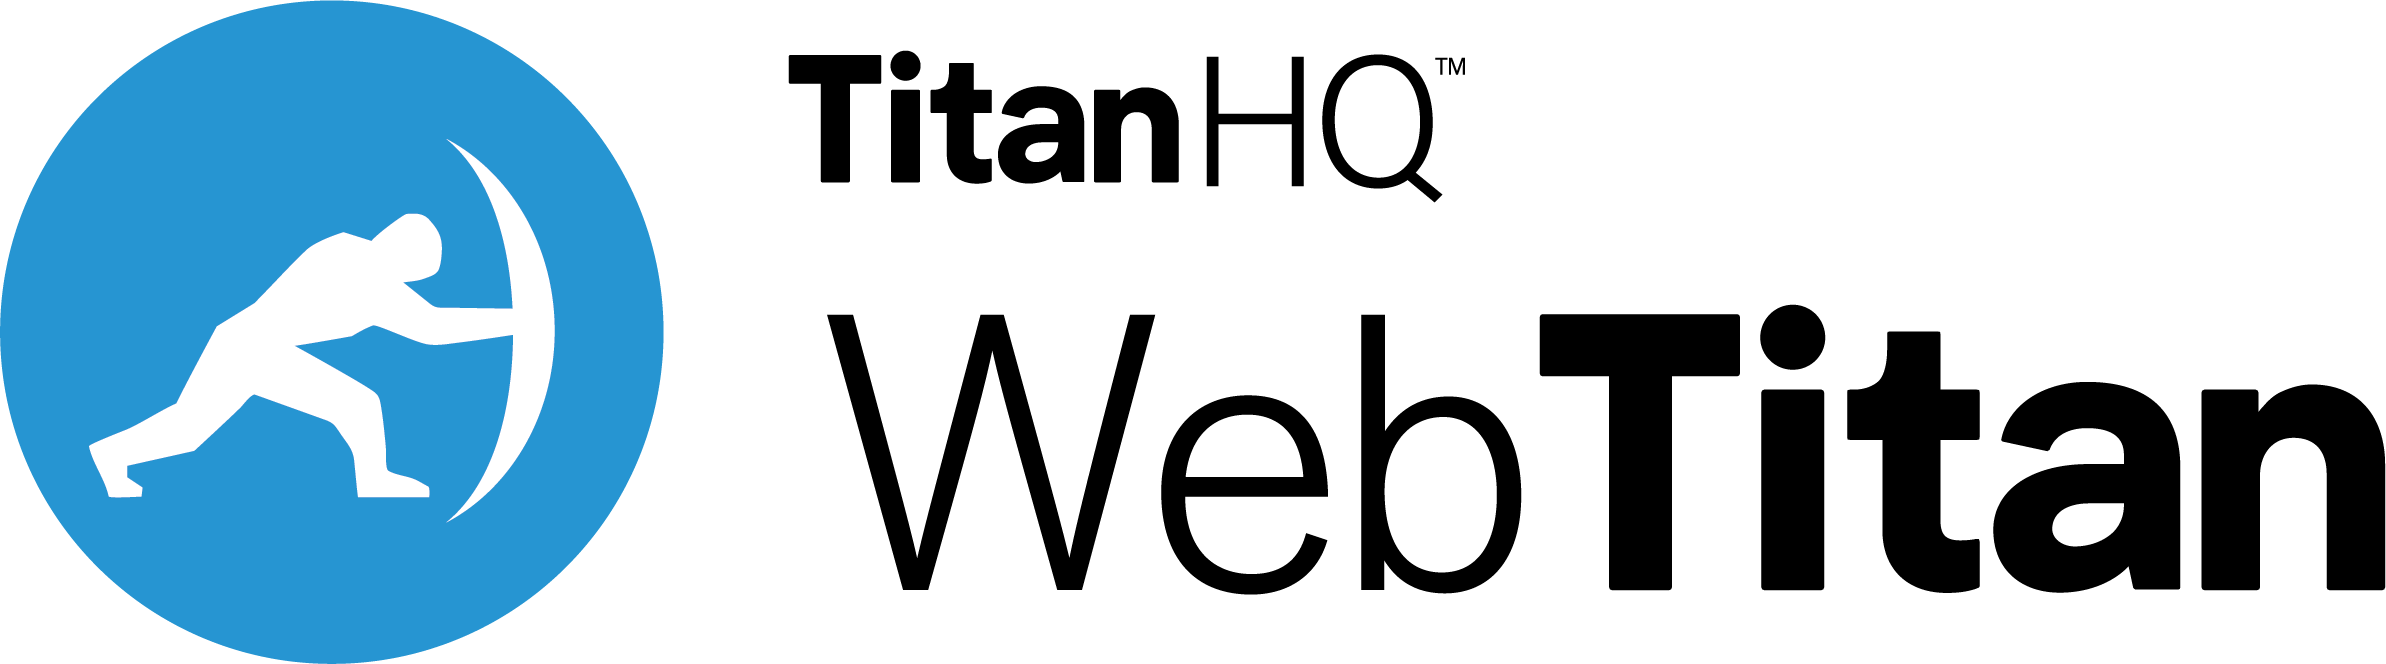 WebTitan Logo